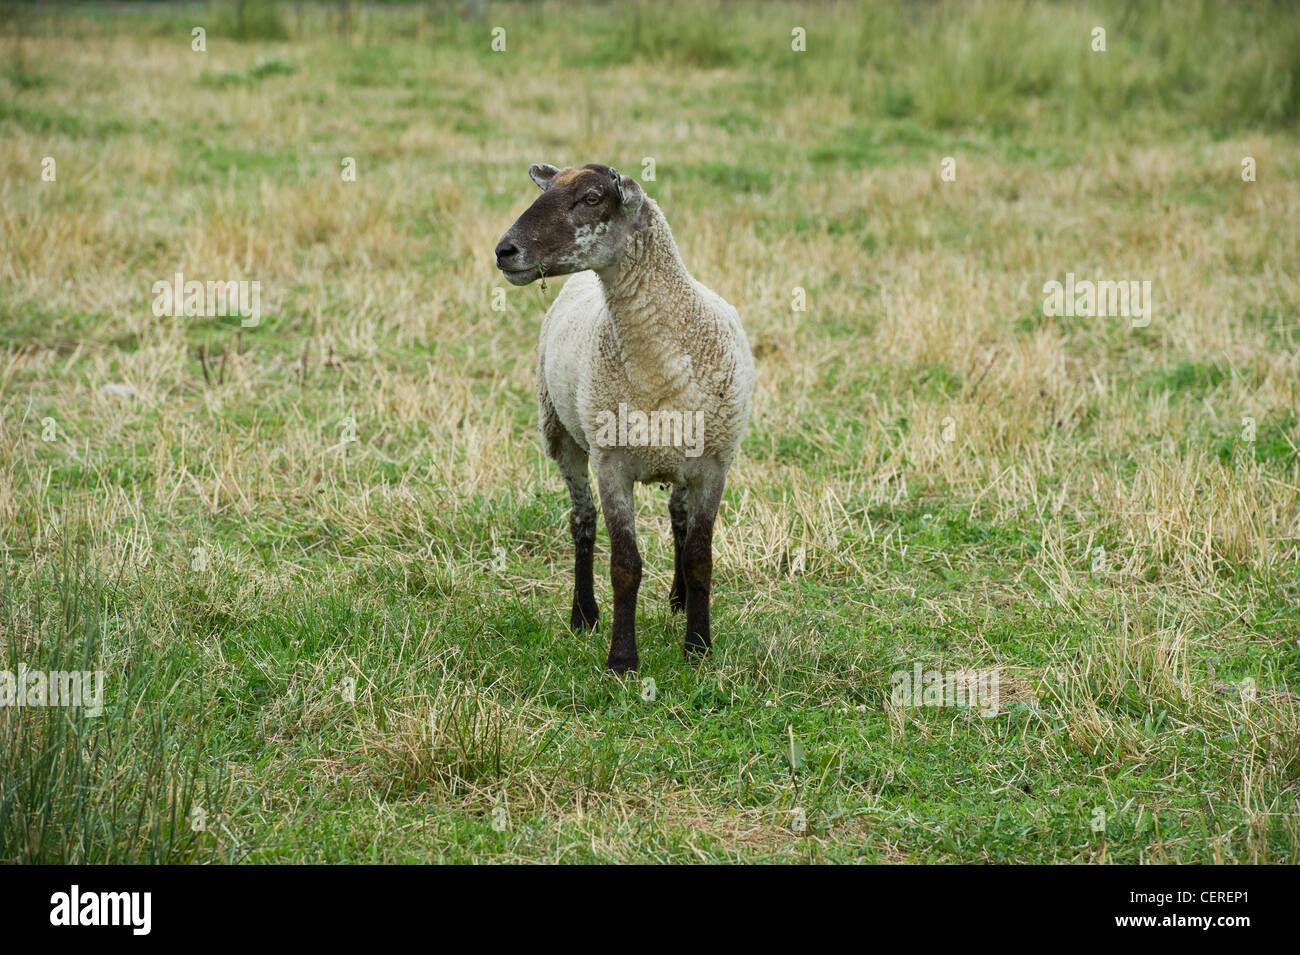 Sheep in field grazing Stock Photo